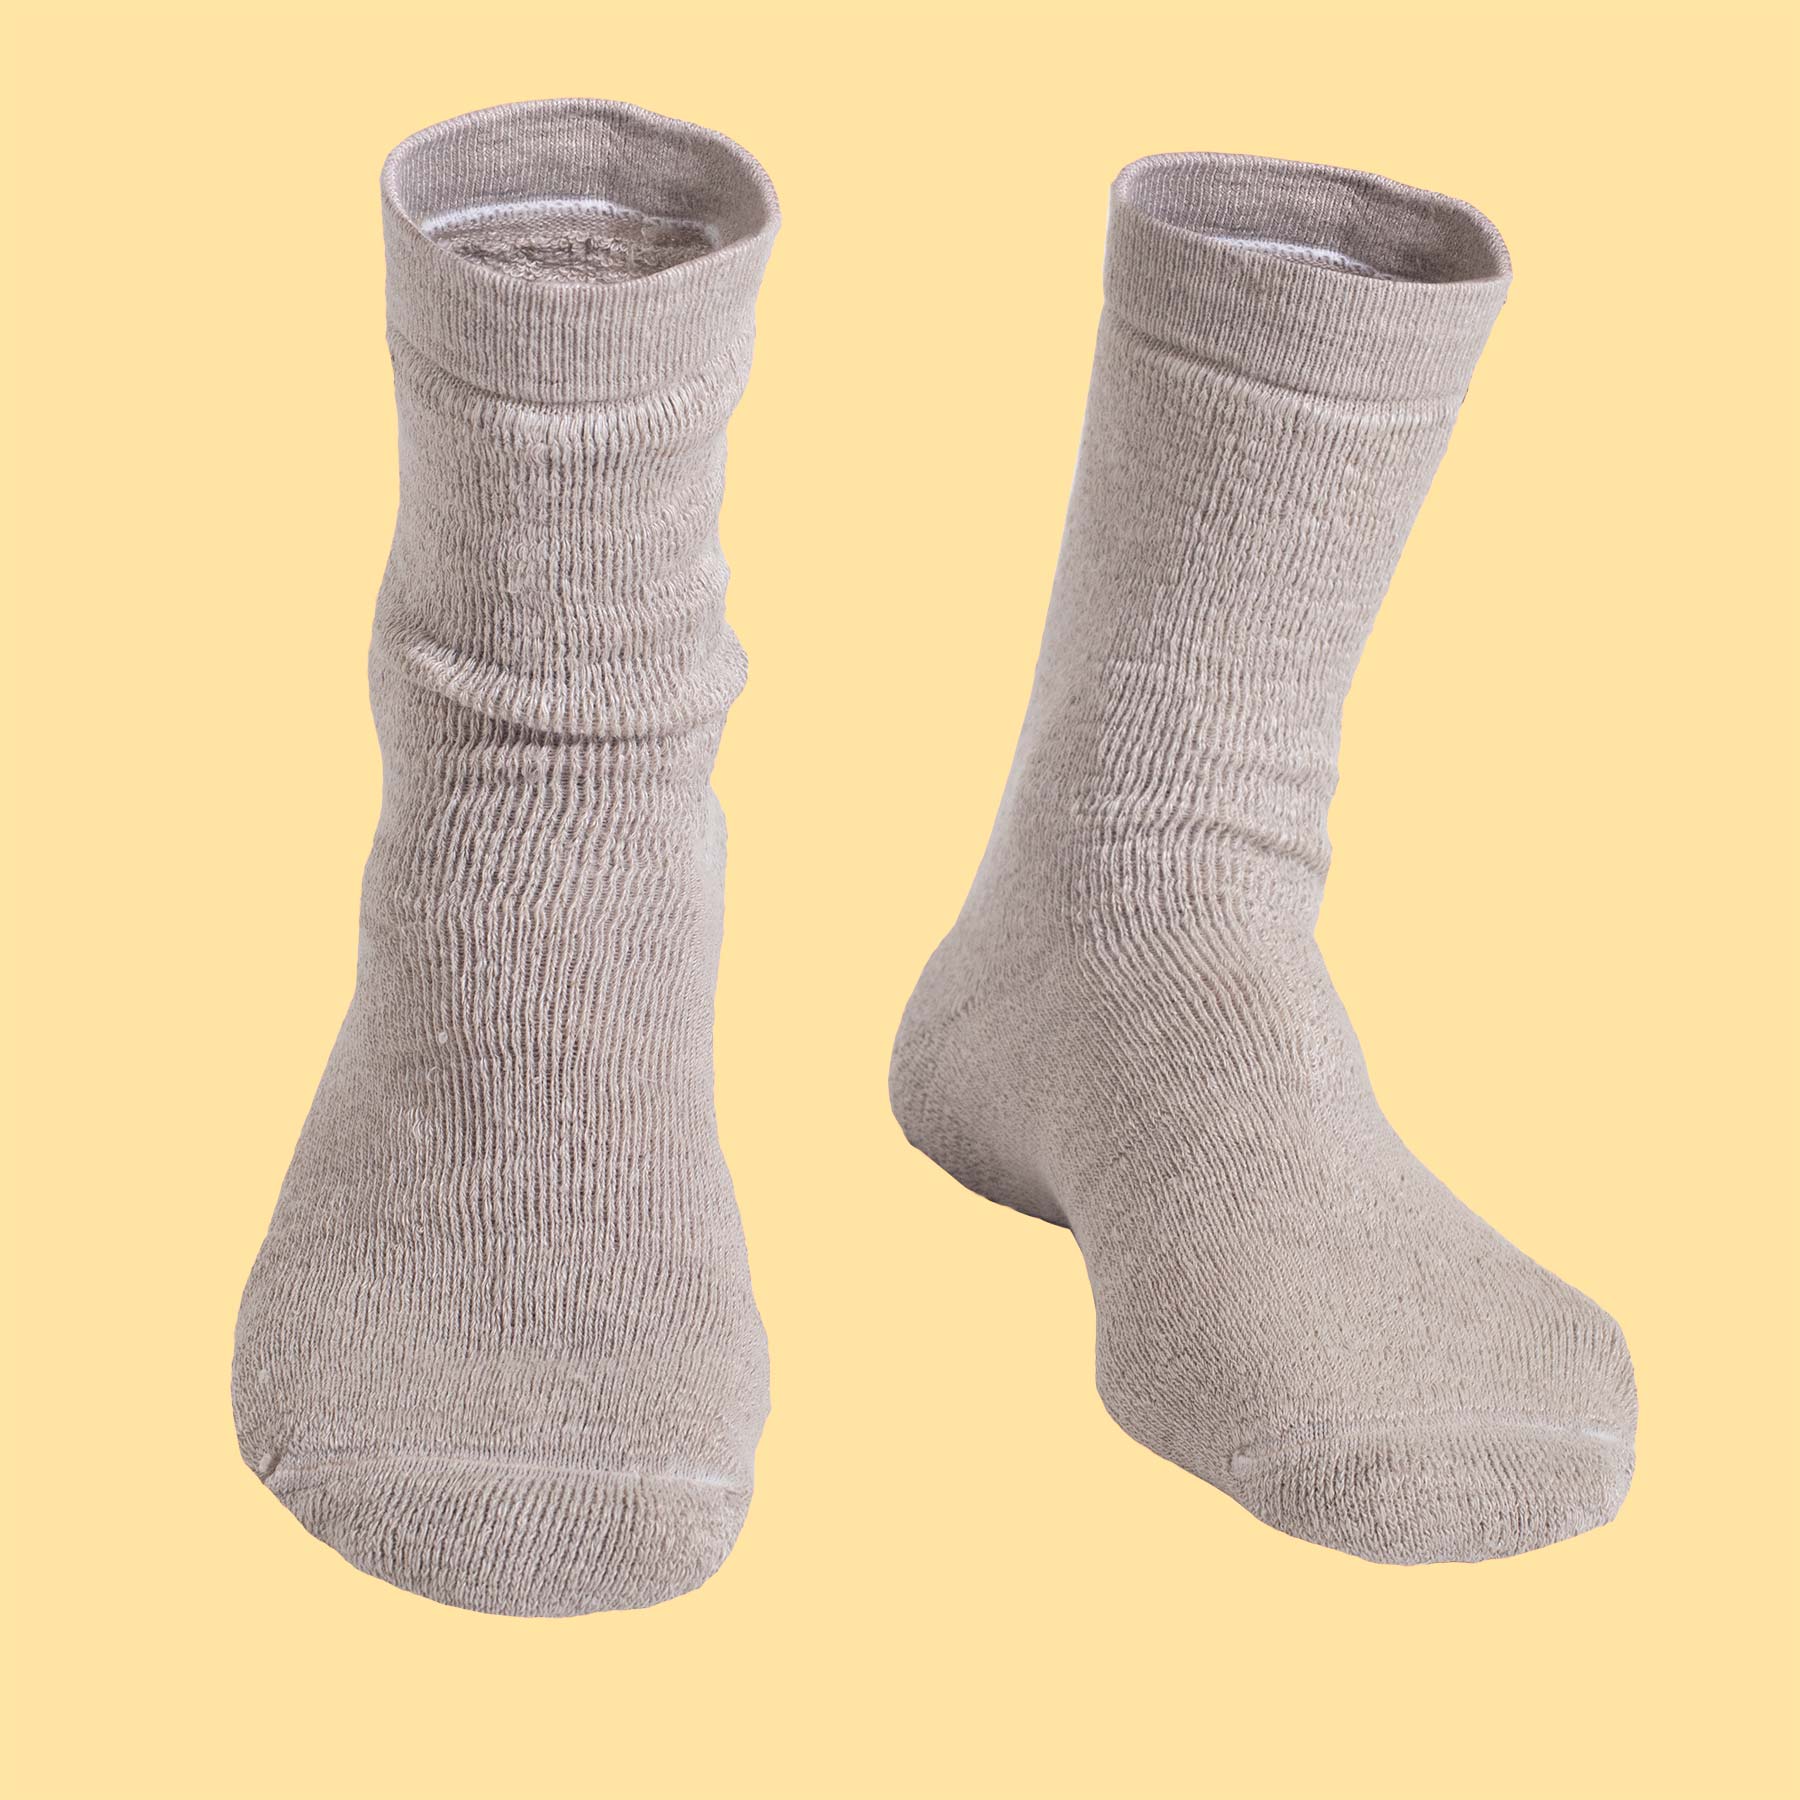 Organic Linen Terry Socks by Rawganique